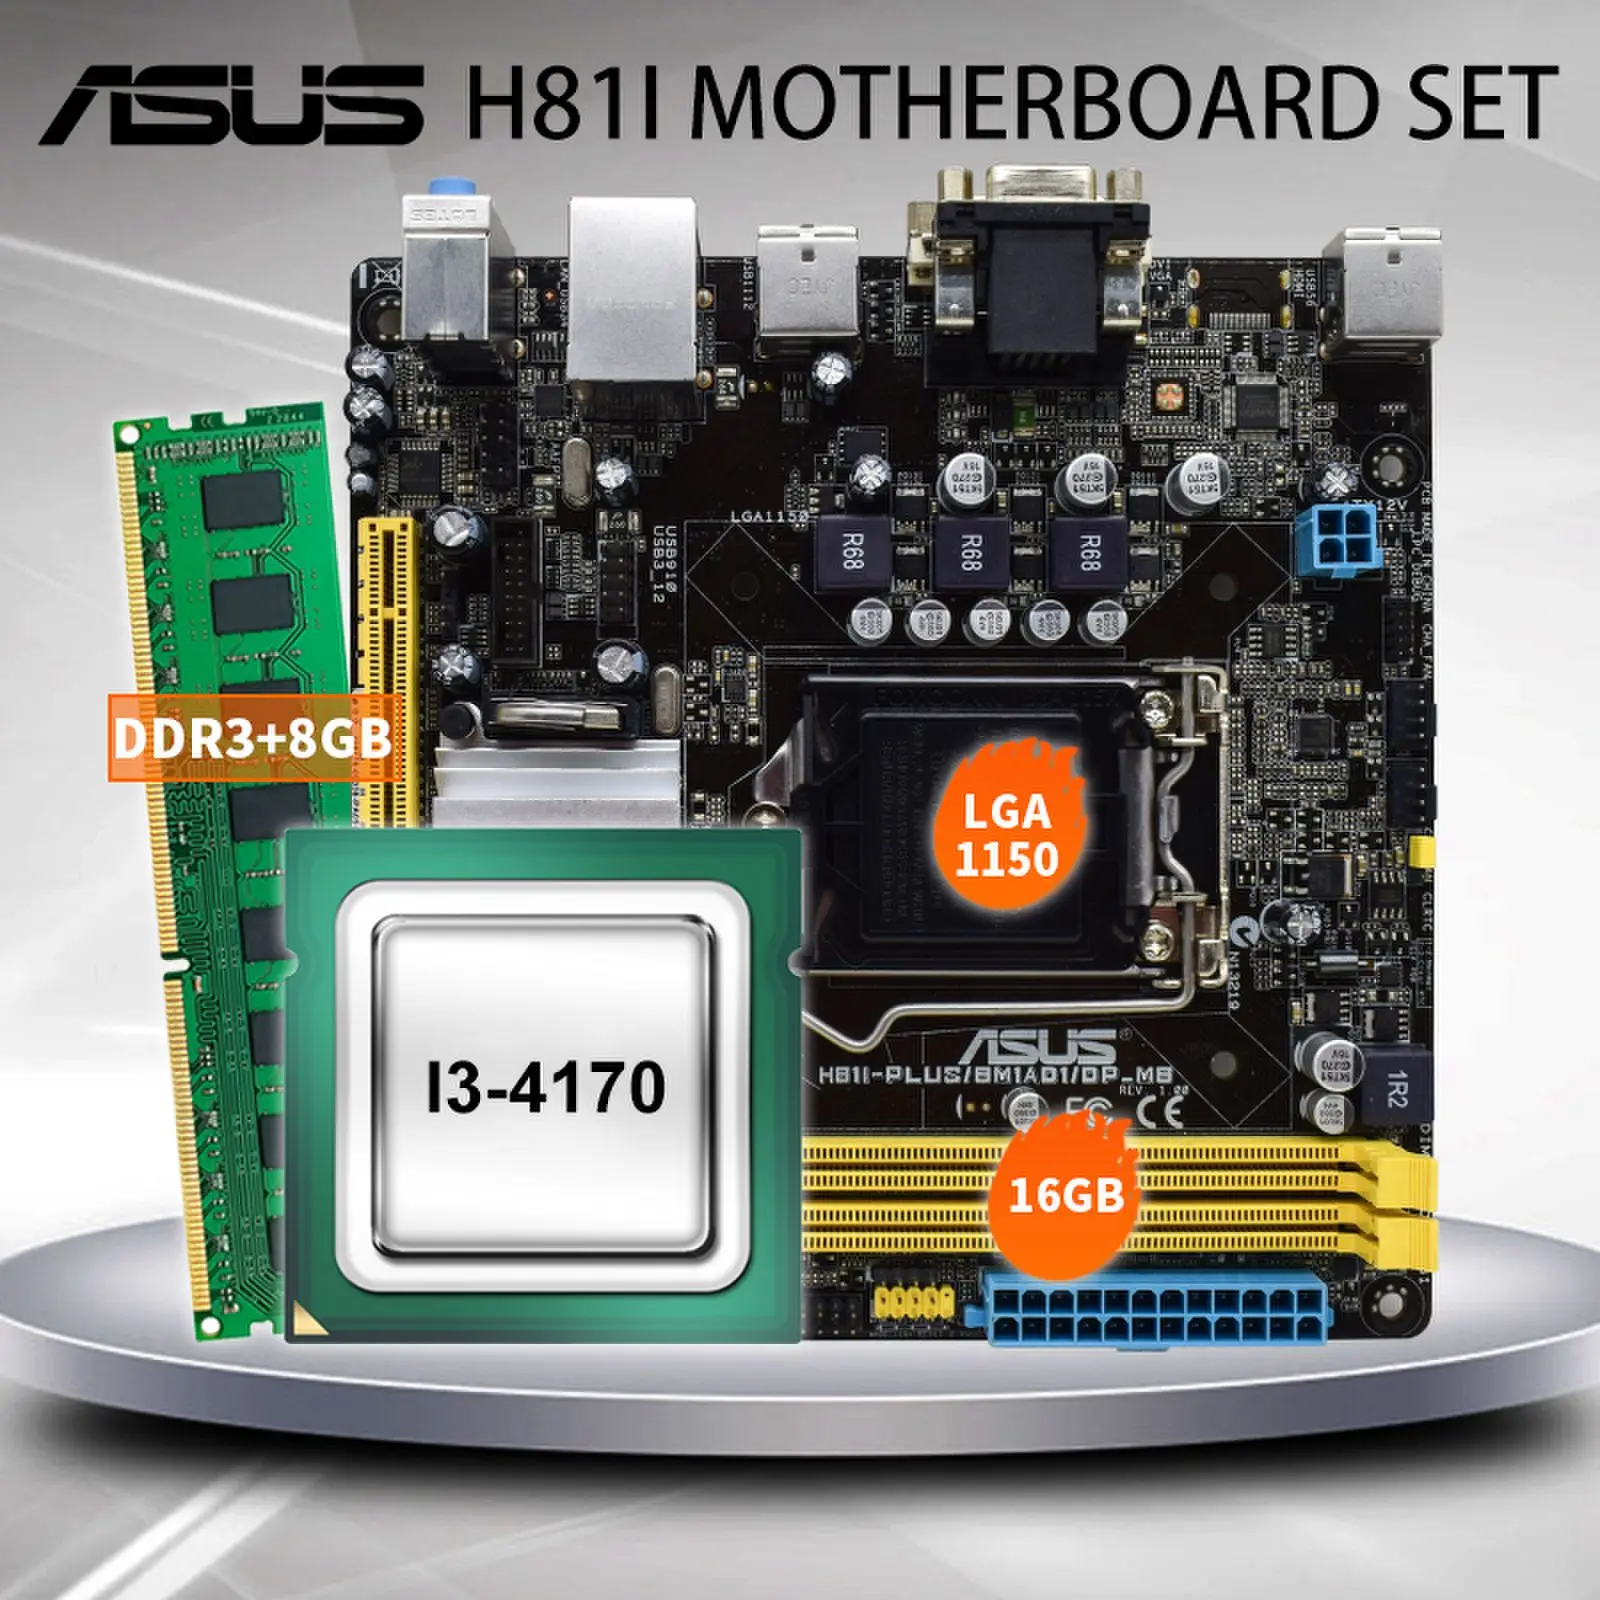 

ASUS H81I-PLUS/BM1AD1 Motherboard Kit Set with Intel Core I3 4170 CPU LGA 1150 Processor DDR3 8GB Memory SATA3 HDMI Mini-ITX